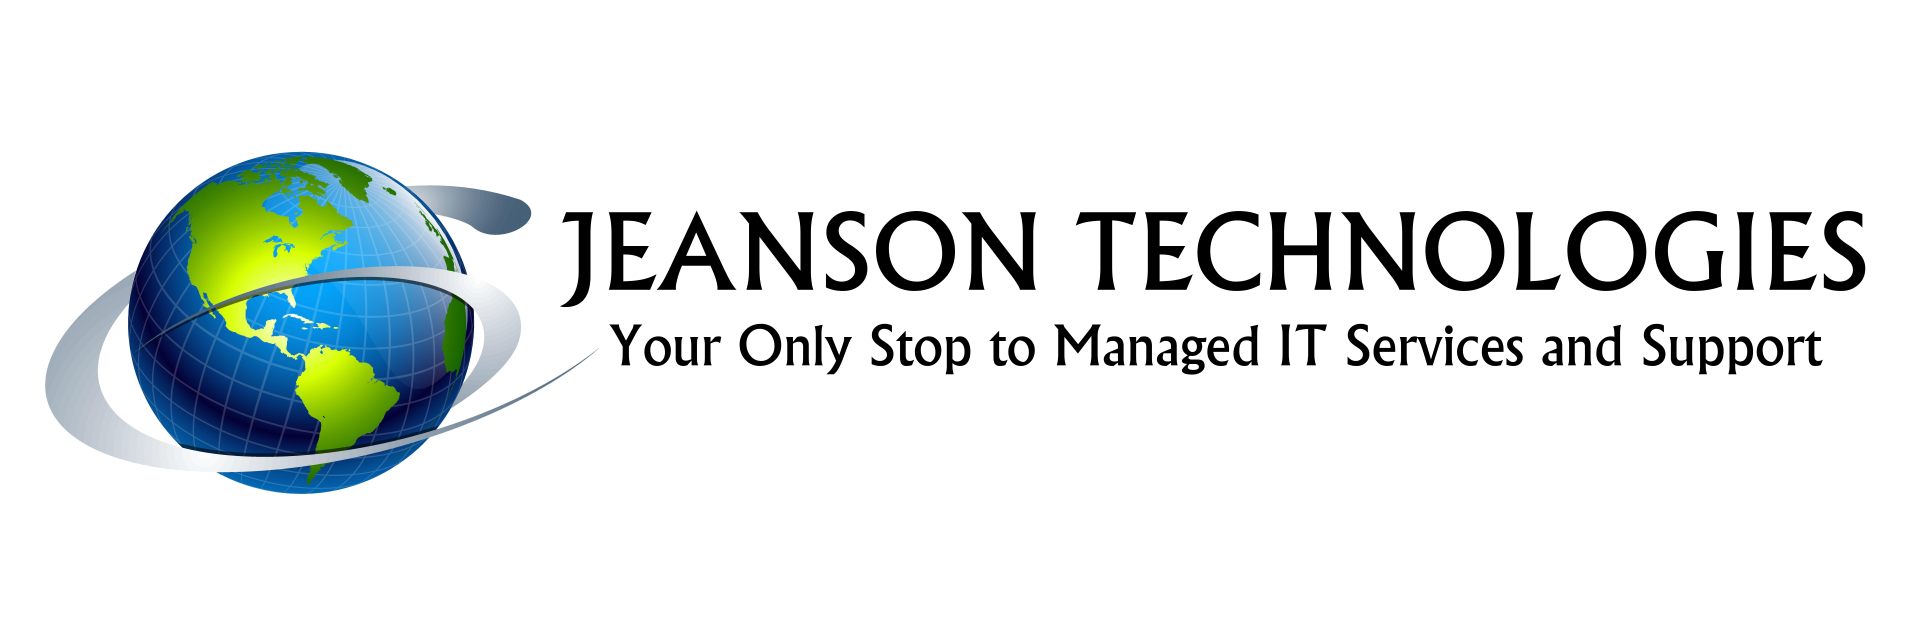 Jeanson Technologies Header